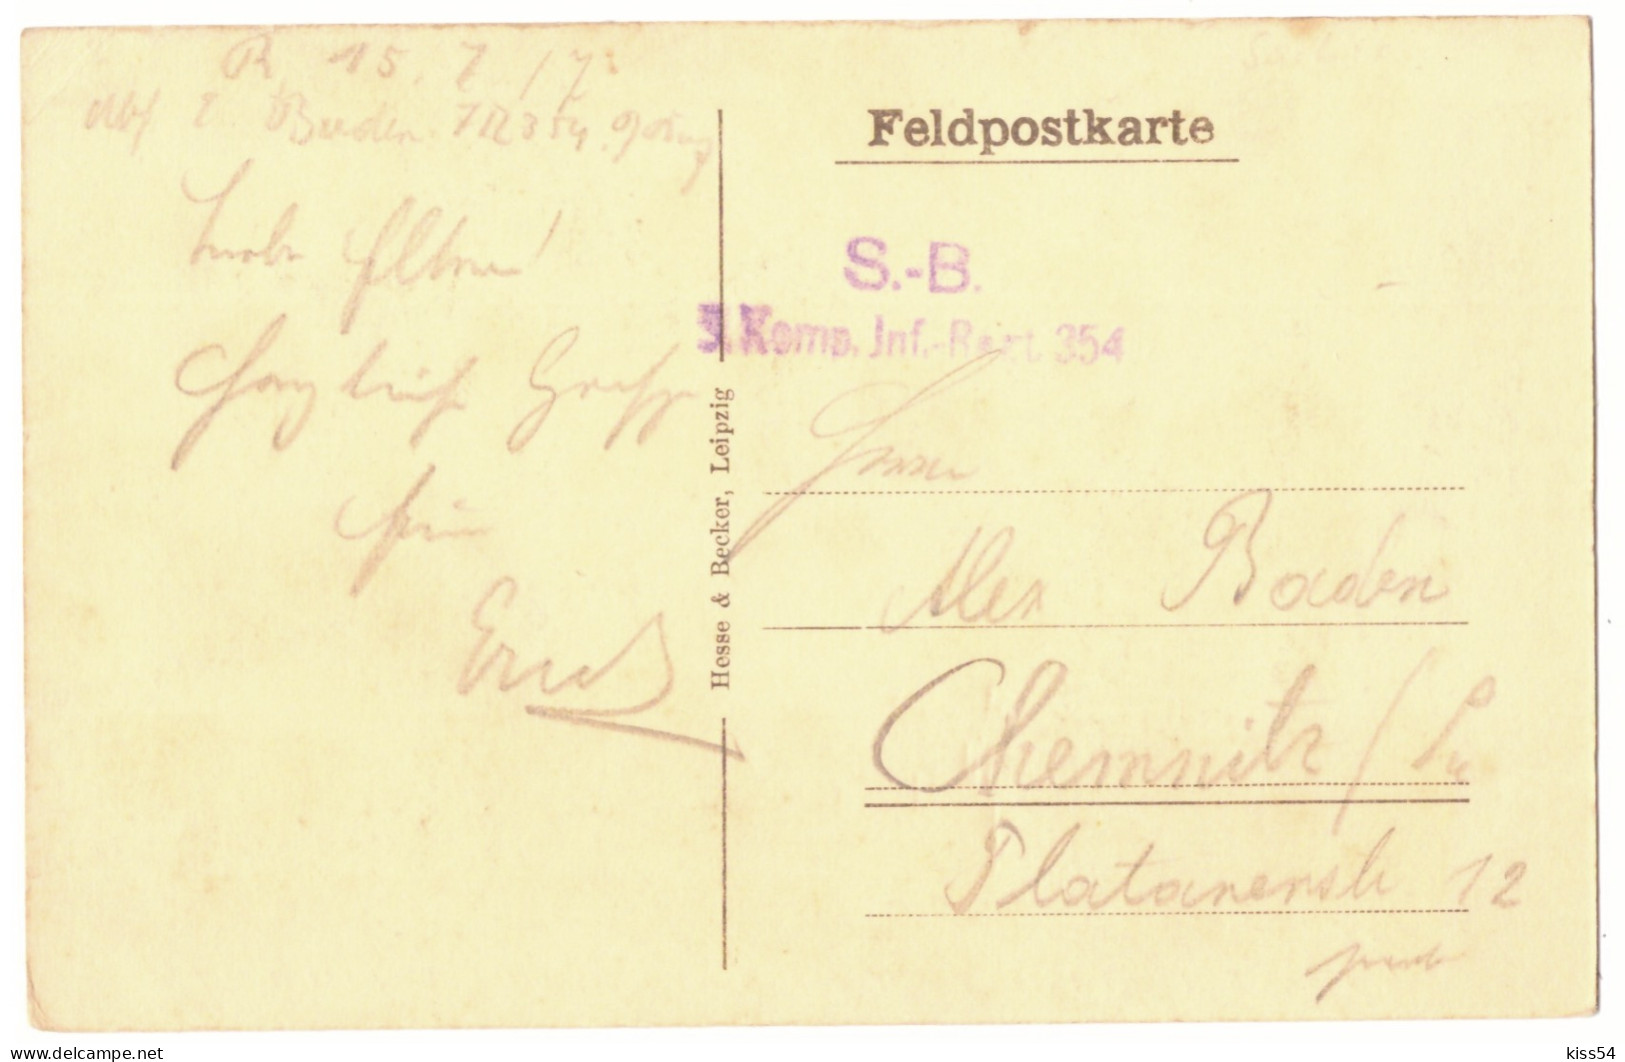 RO 81 - 18381 FOCSANI, German Army On The Street, Romania - Old Postcard, CENSOR - Used - 1917 - Romania